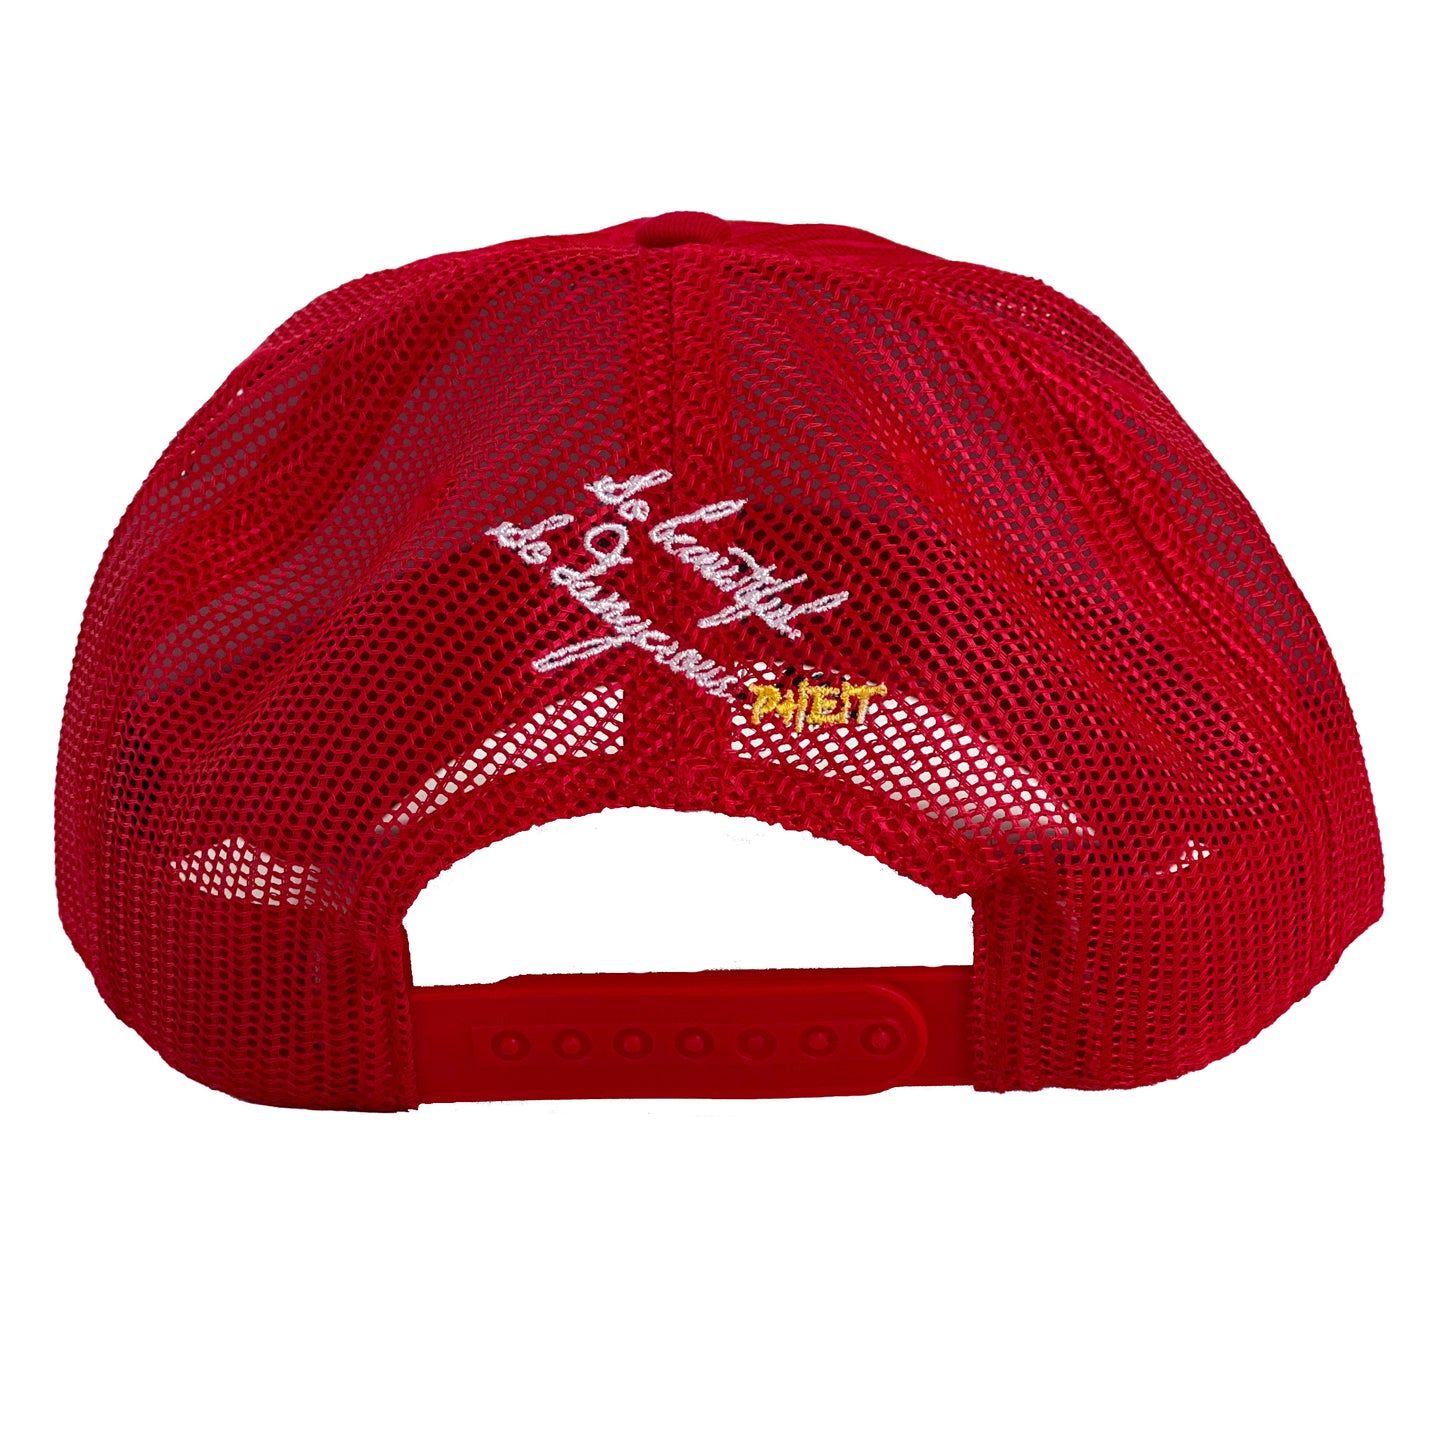 SBSD So "FREE" cap (red mesh)